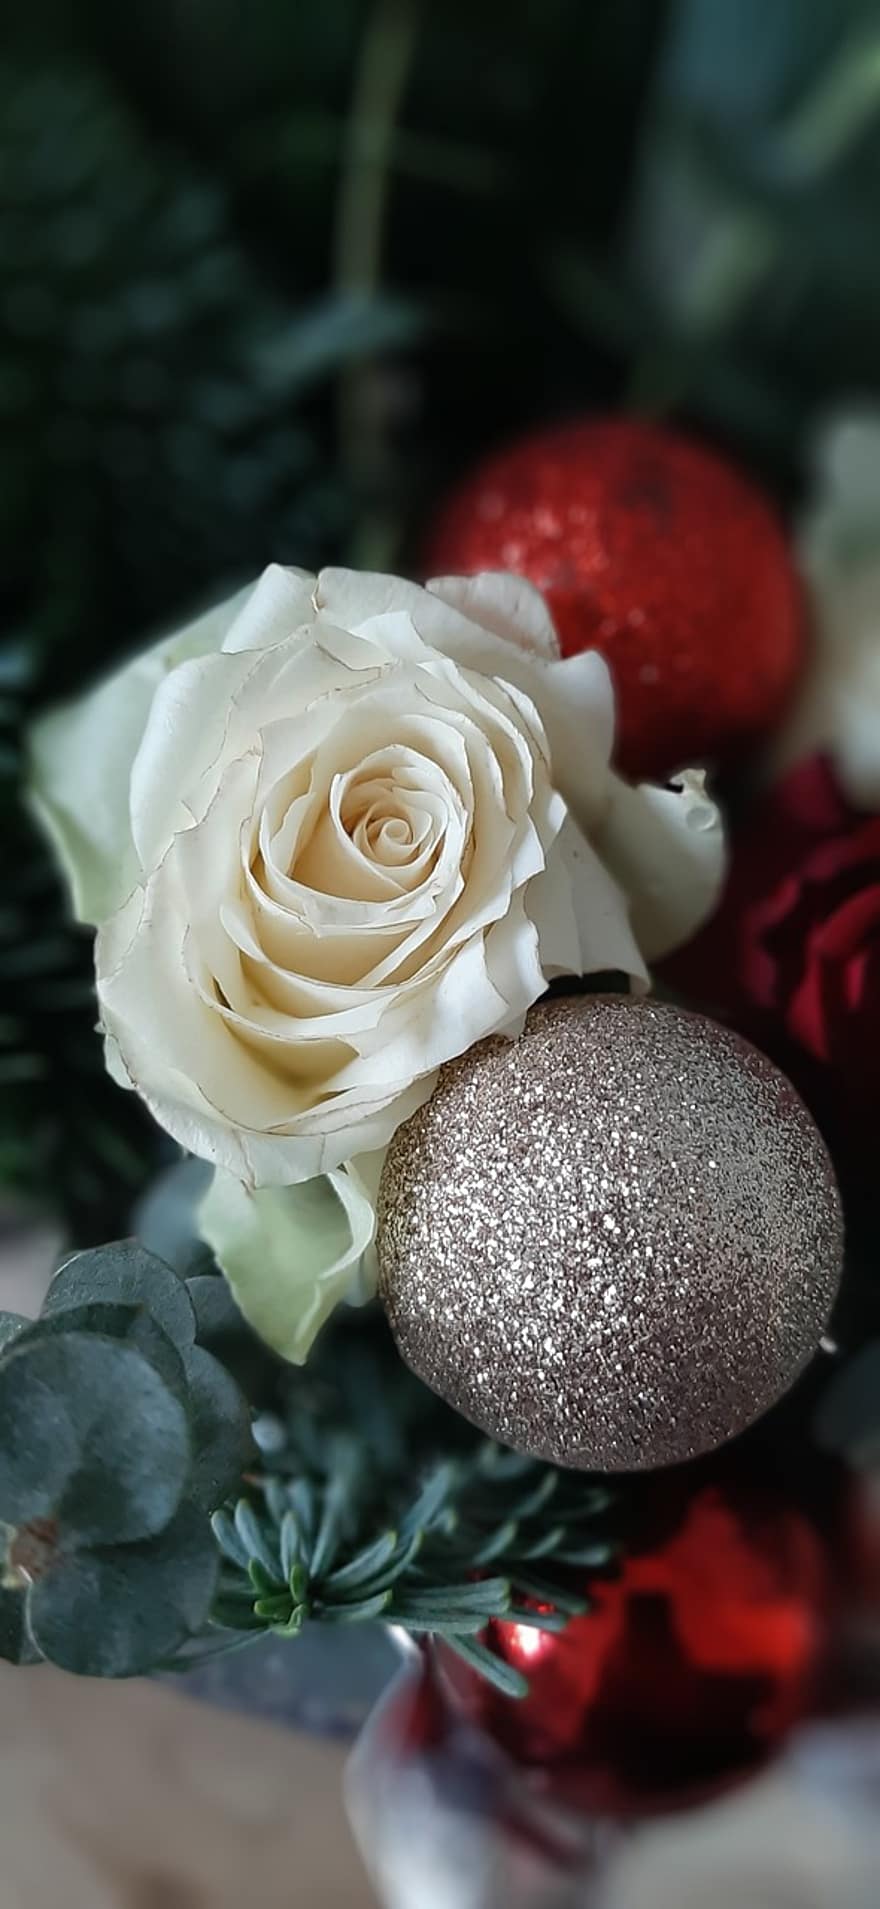 Rose, Christmas, Christmas Ball, Christmas Piece, Flower, Flower Arranging, Gift